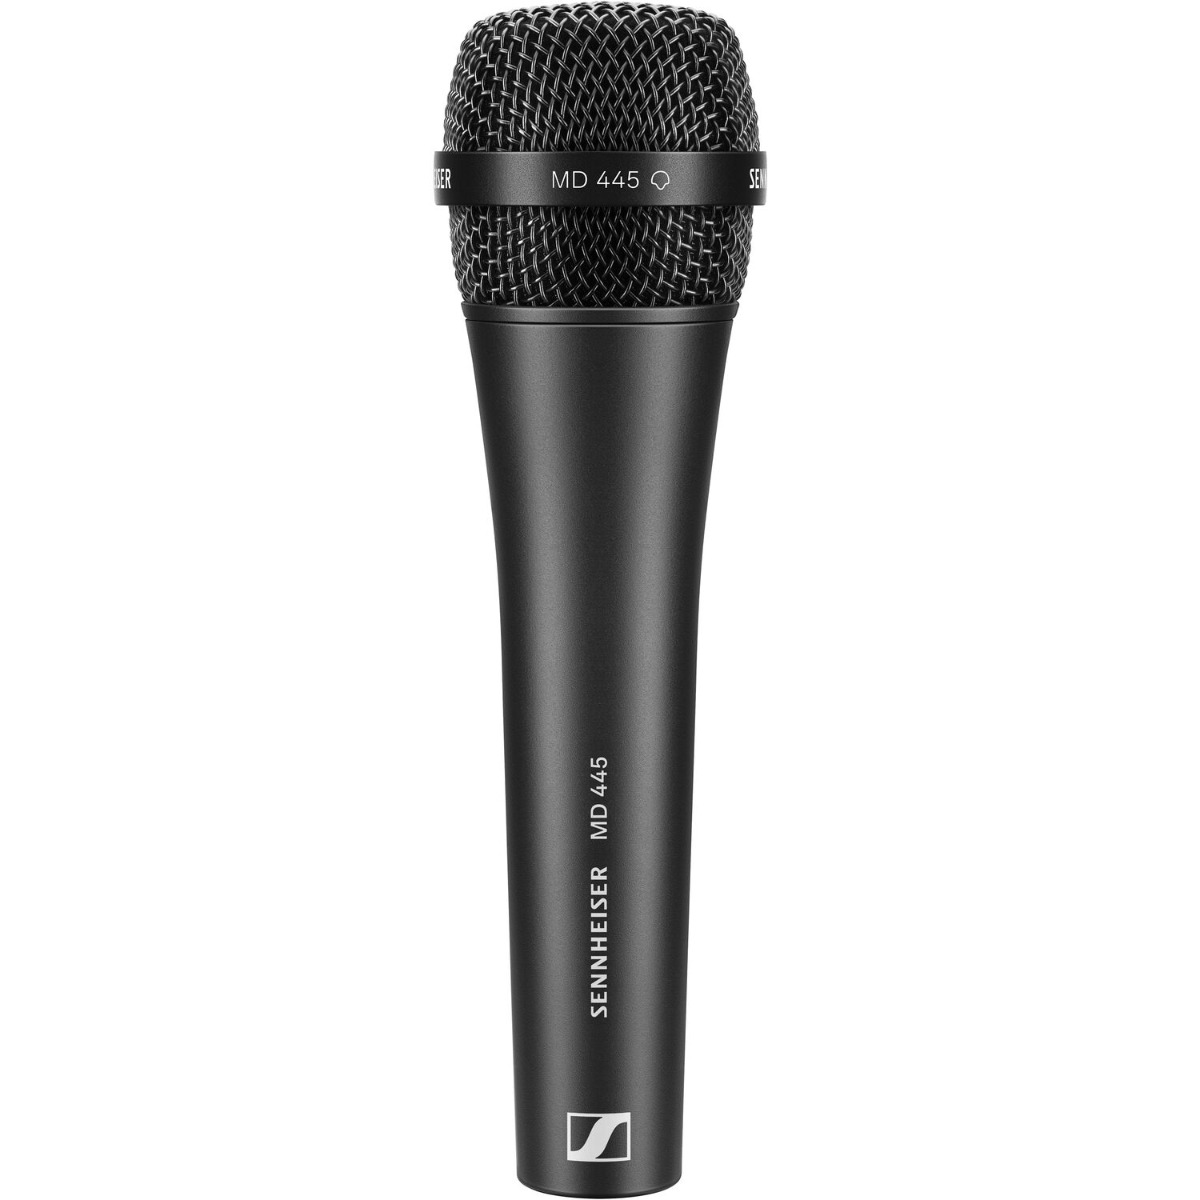 Sennheiser MD 445 - Supercardioid Microphone